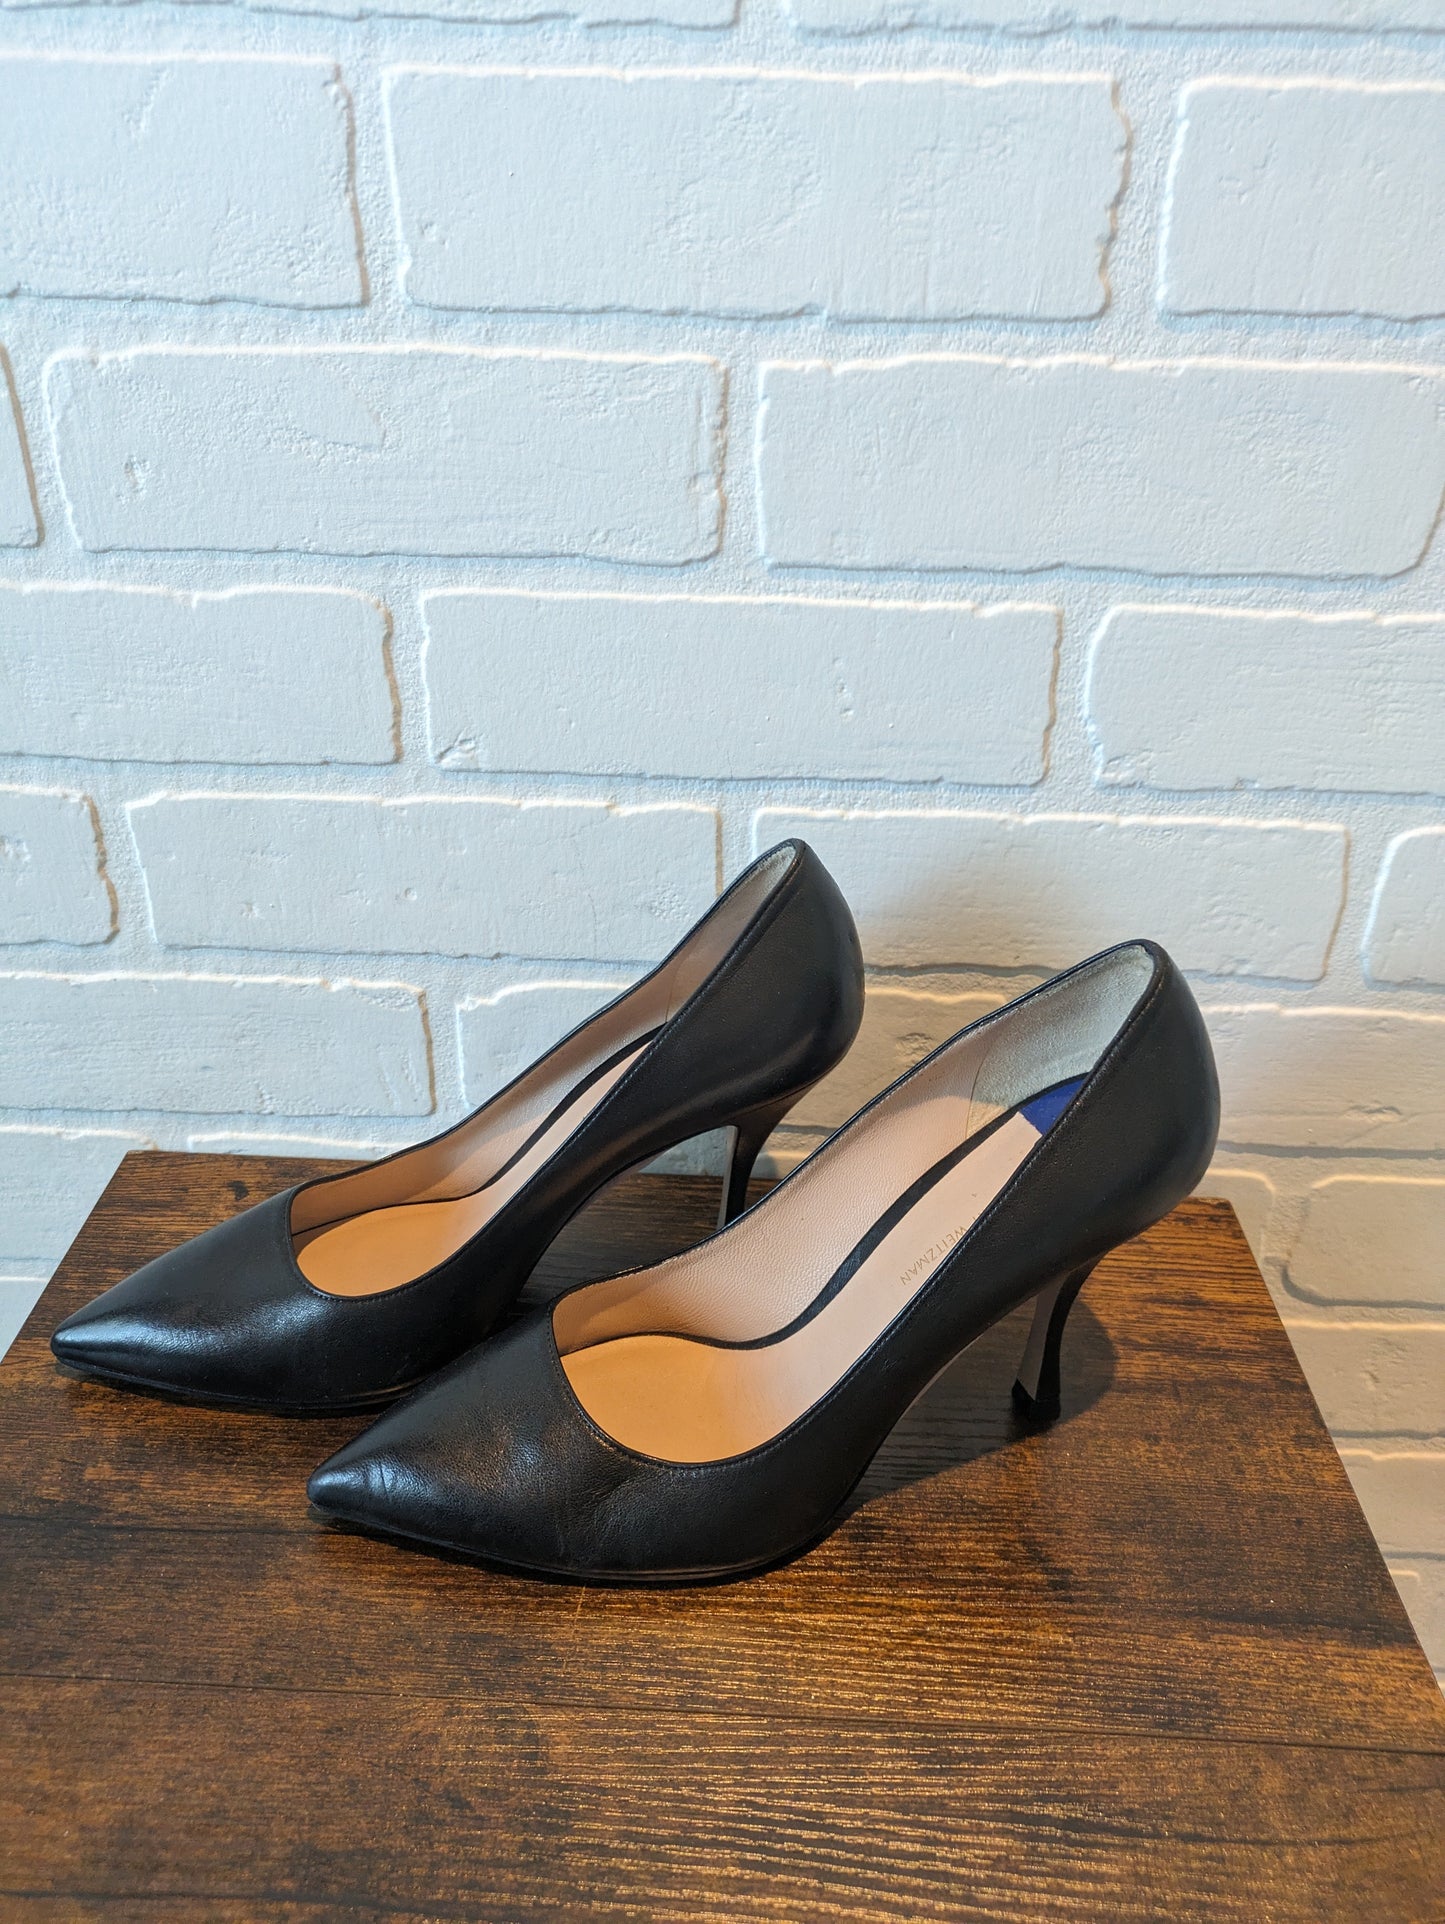 Black Shoes Heels Stiletto Stuart Weitzman, Size 8.5